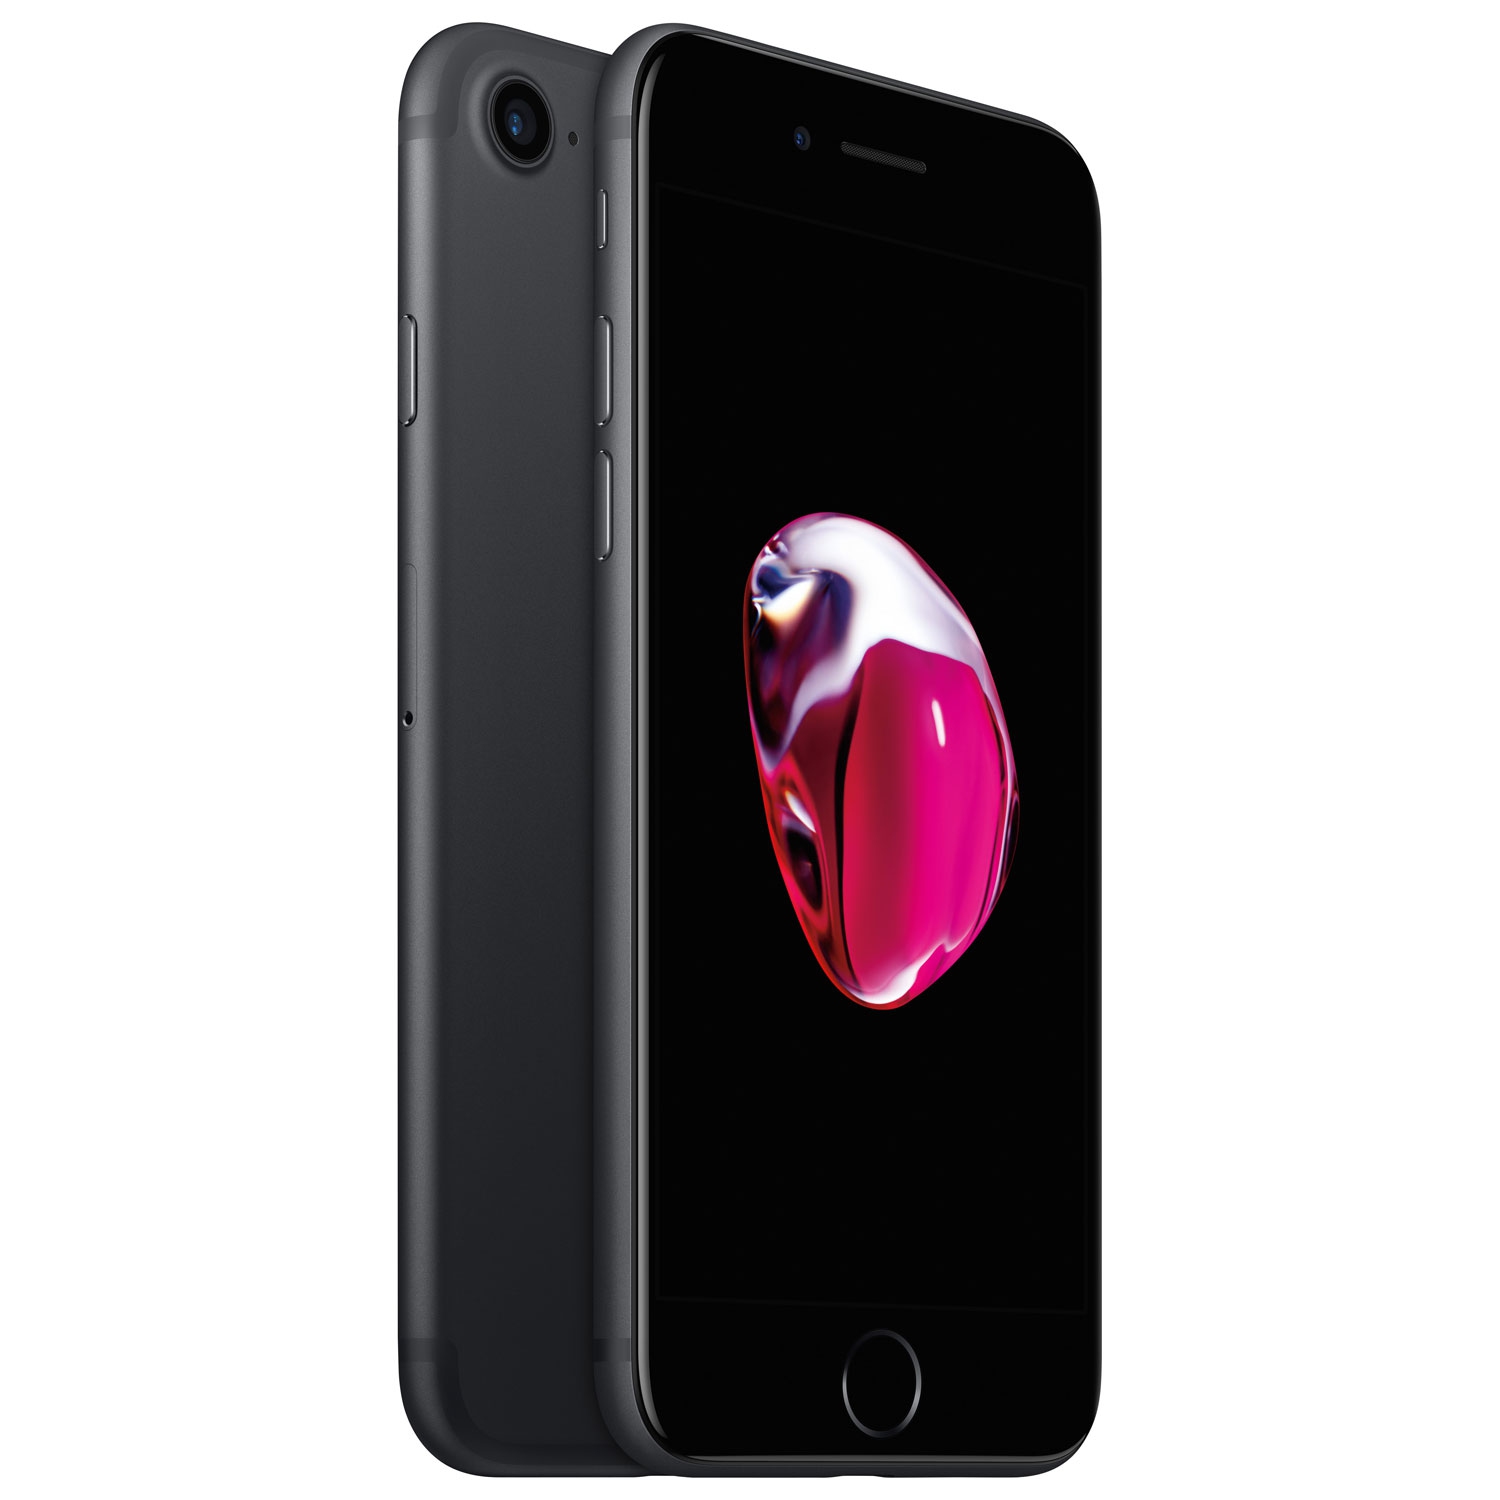 Refurbished (Excellent) - Apple iPhone 7 128GB Smartphone - Black - Unlocked - Certified Refurbished